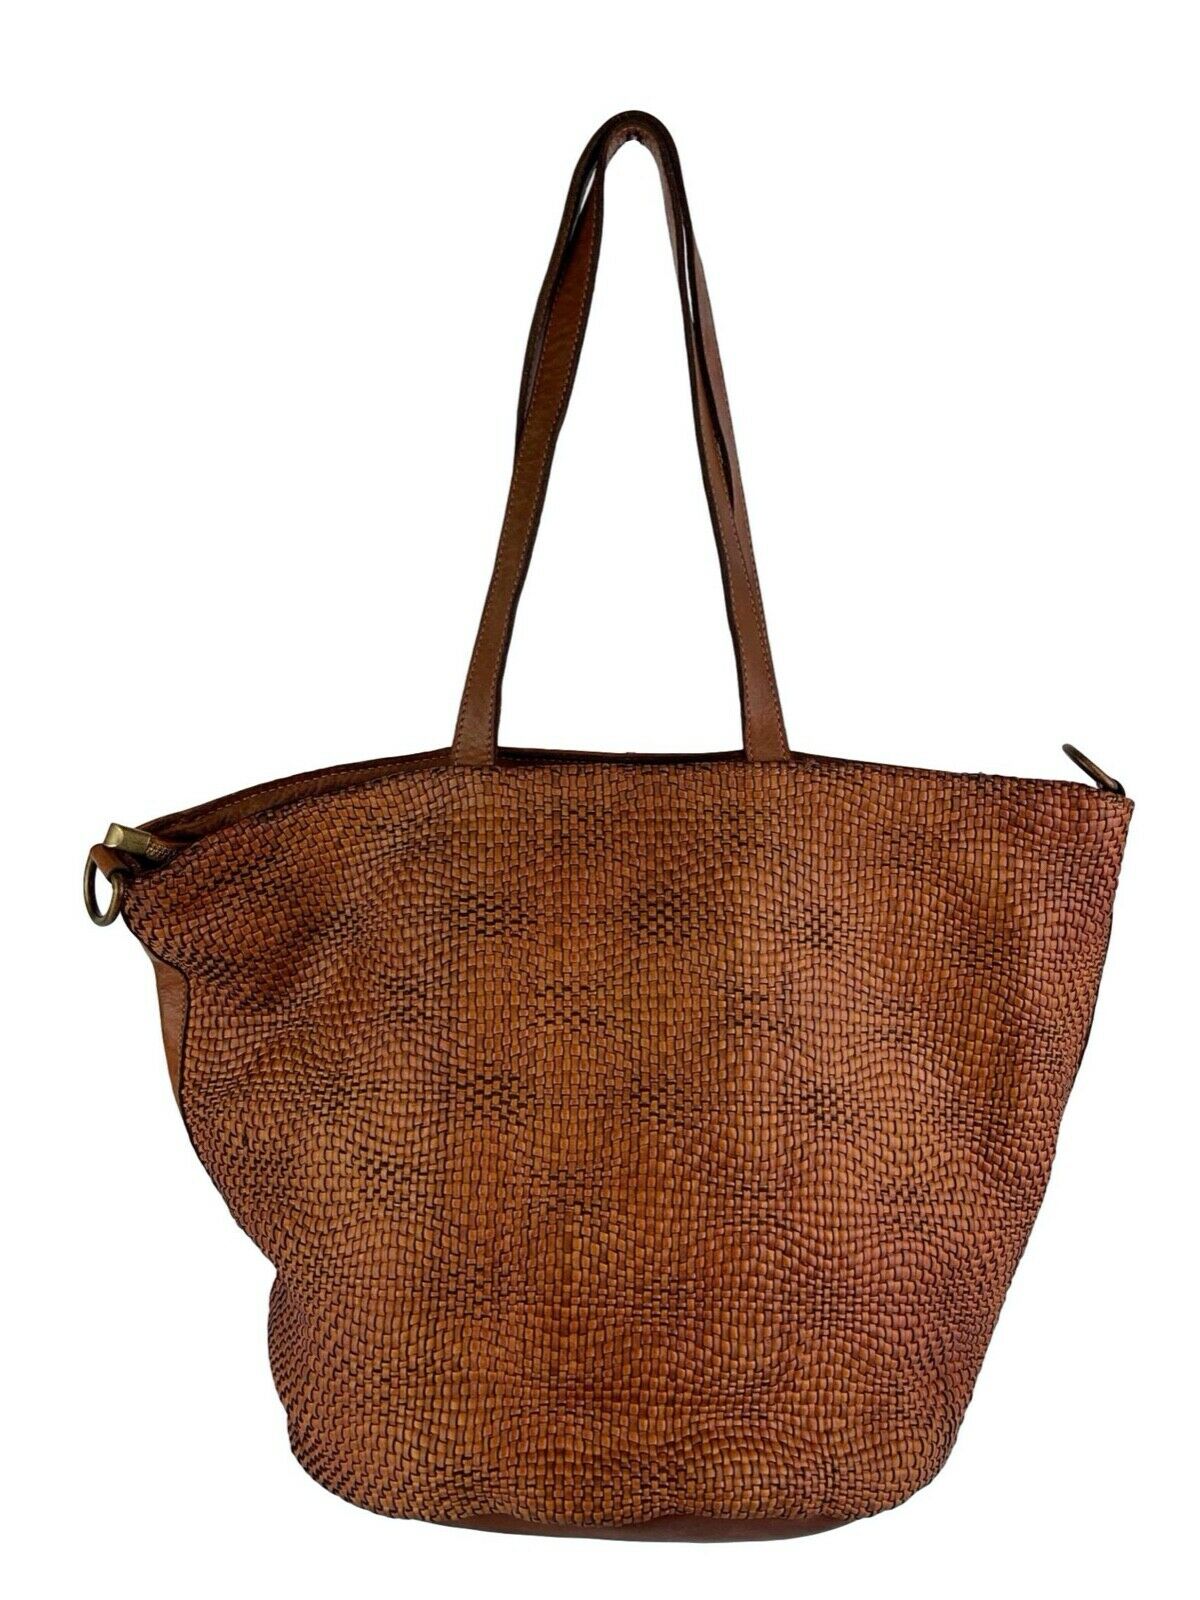 BZNA Bag Misa Cognac Italy Vintage Schultertasche Designer Handtasche Leder